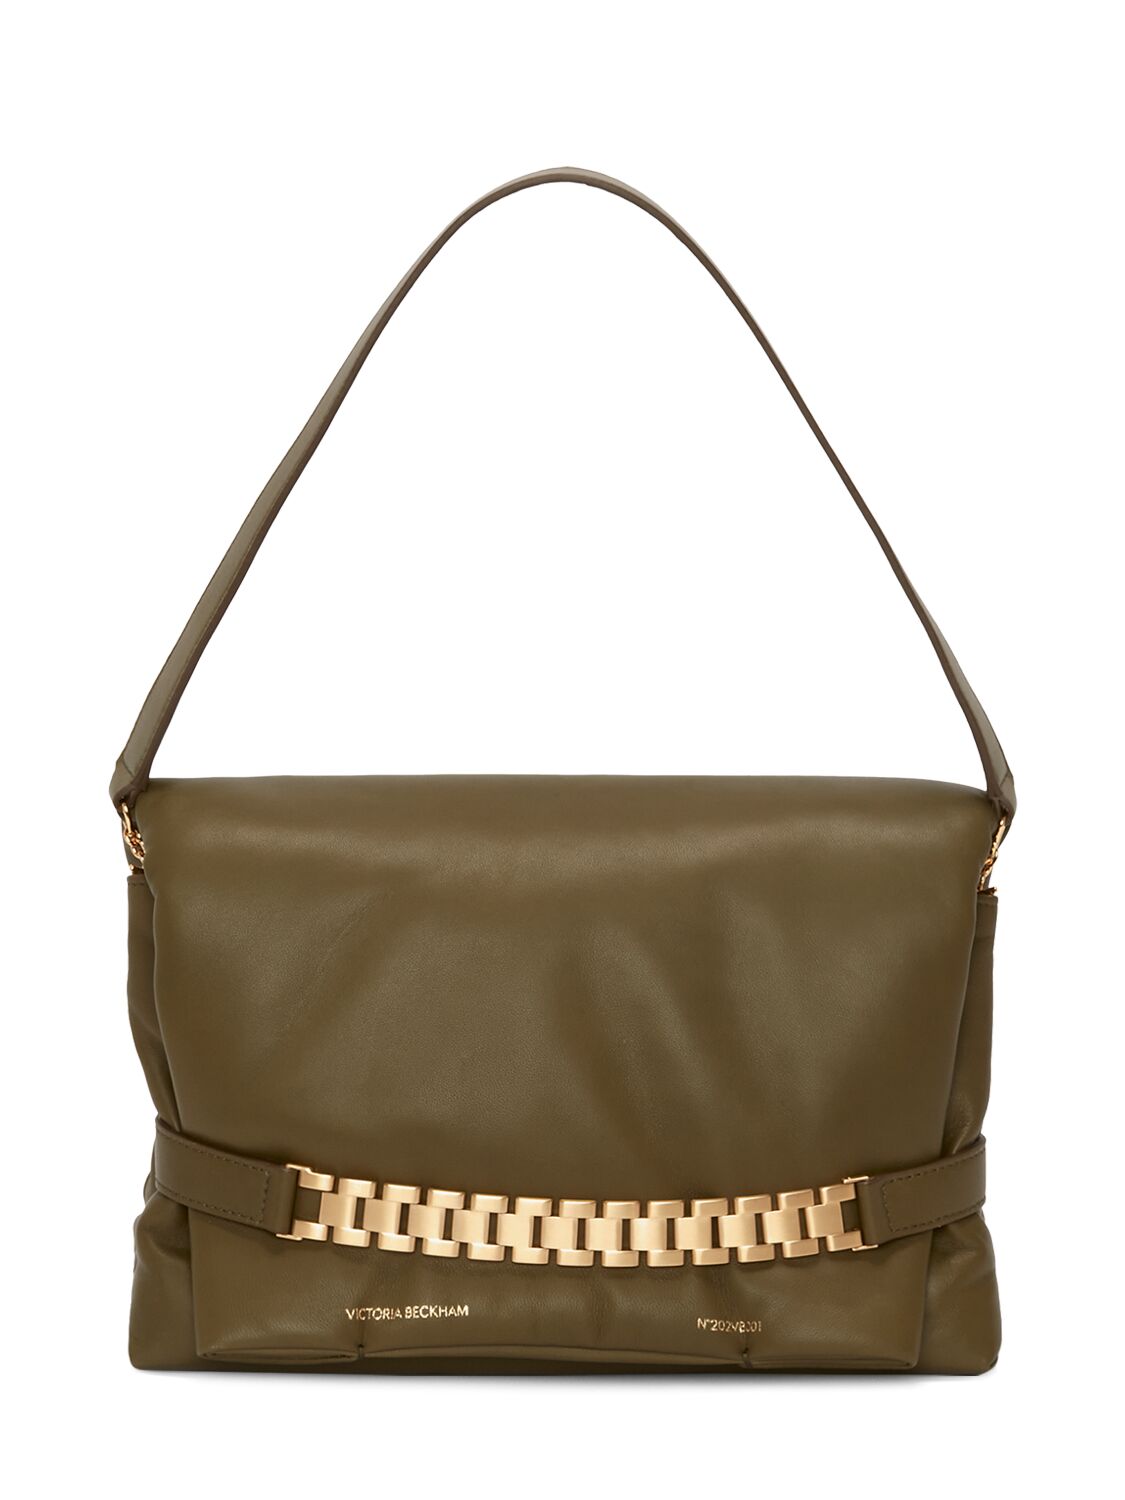 Victoria Beckham Puffy Chain Leather Shoulder Bag In Khaki